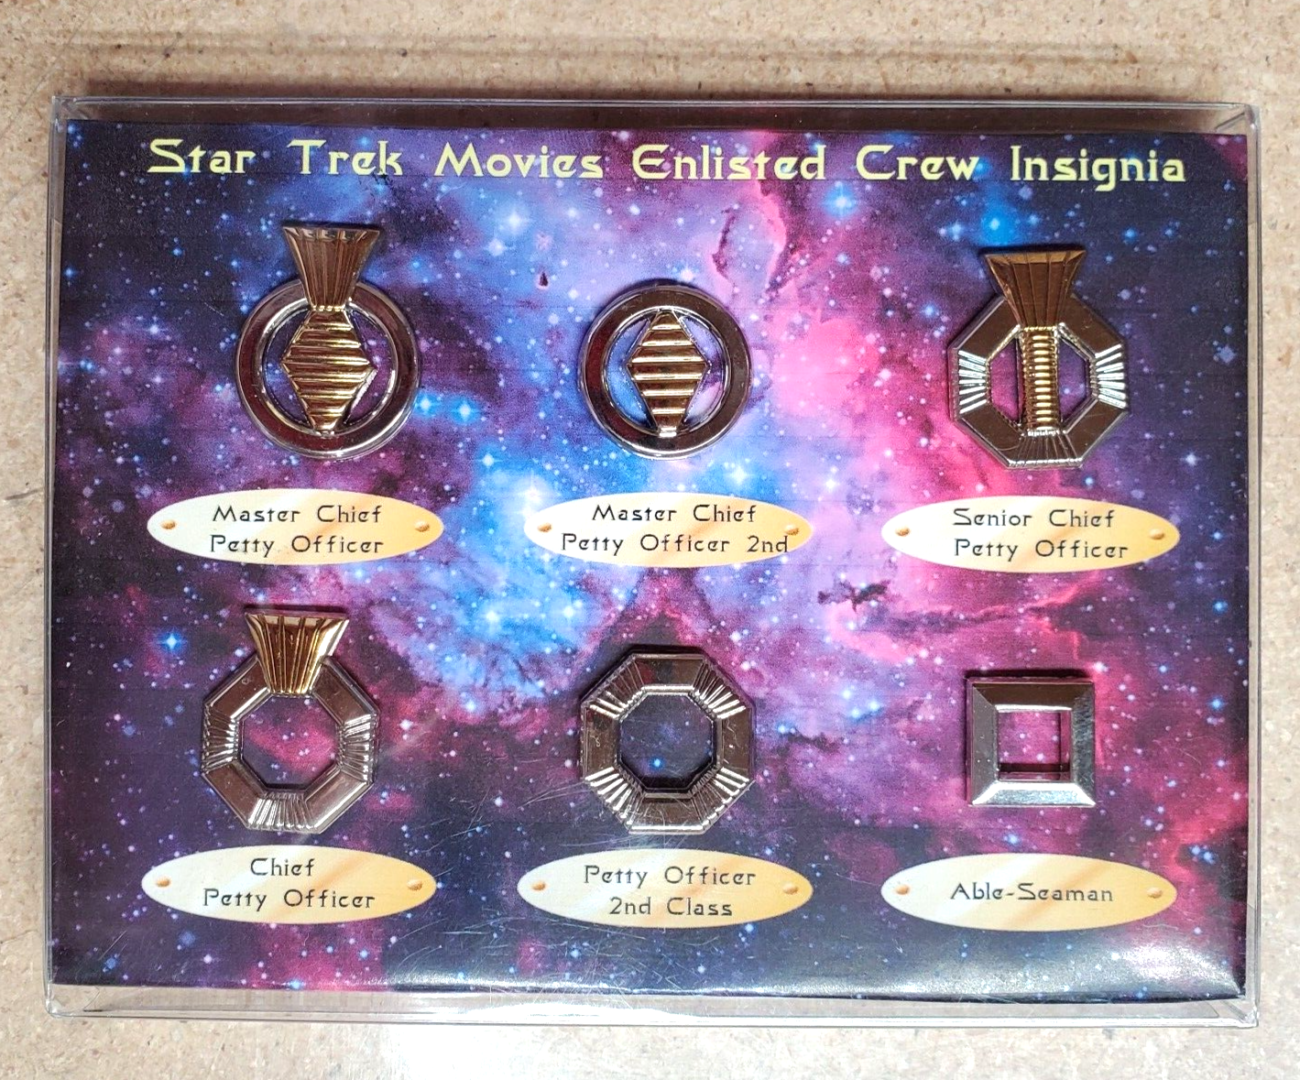 Star Trek movie enlisted crew insignia badges.